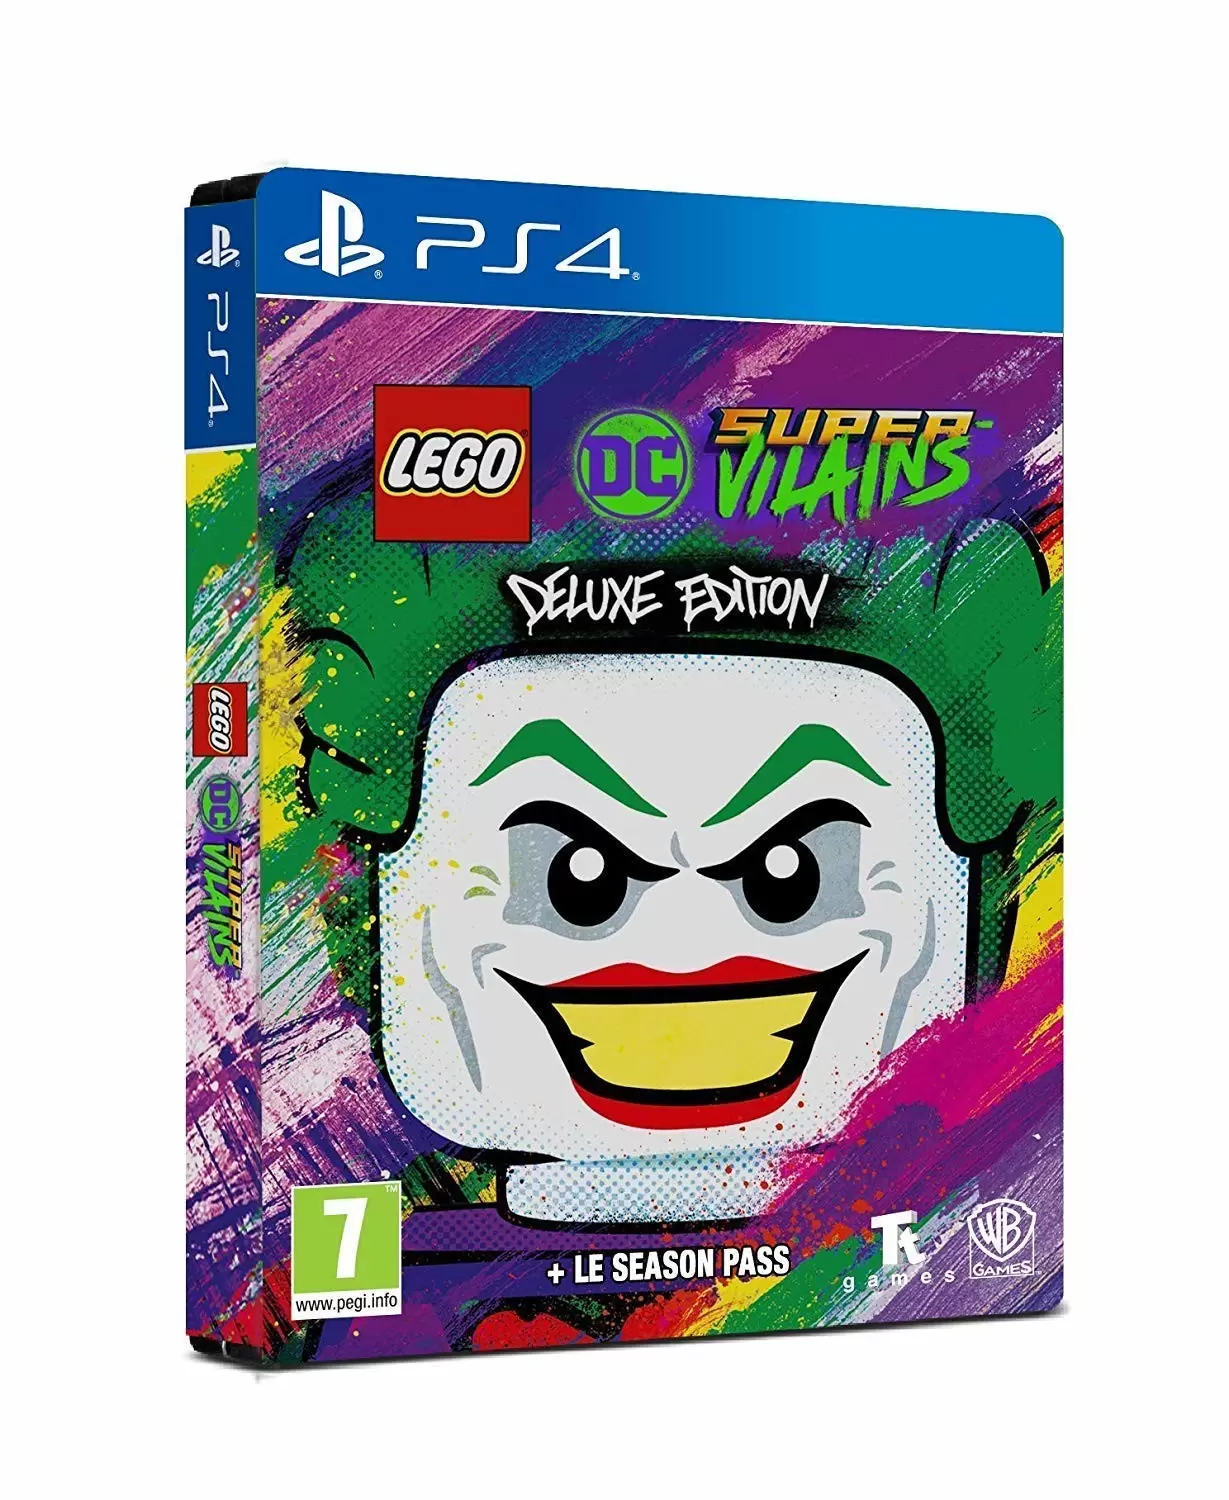 PS4 Games - Lego Dc Super Vilains Deluxe Edition